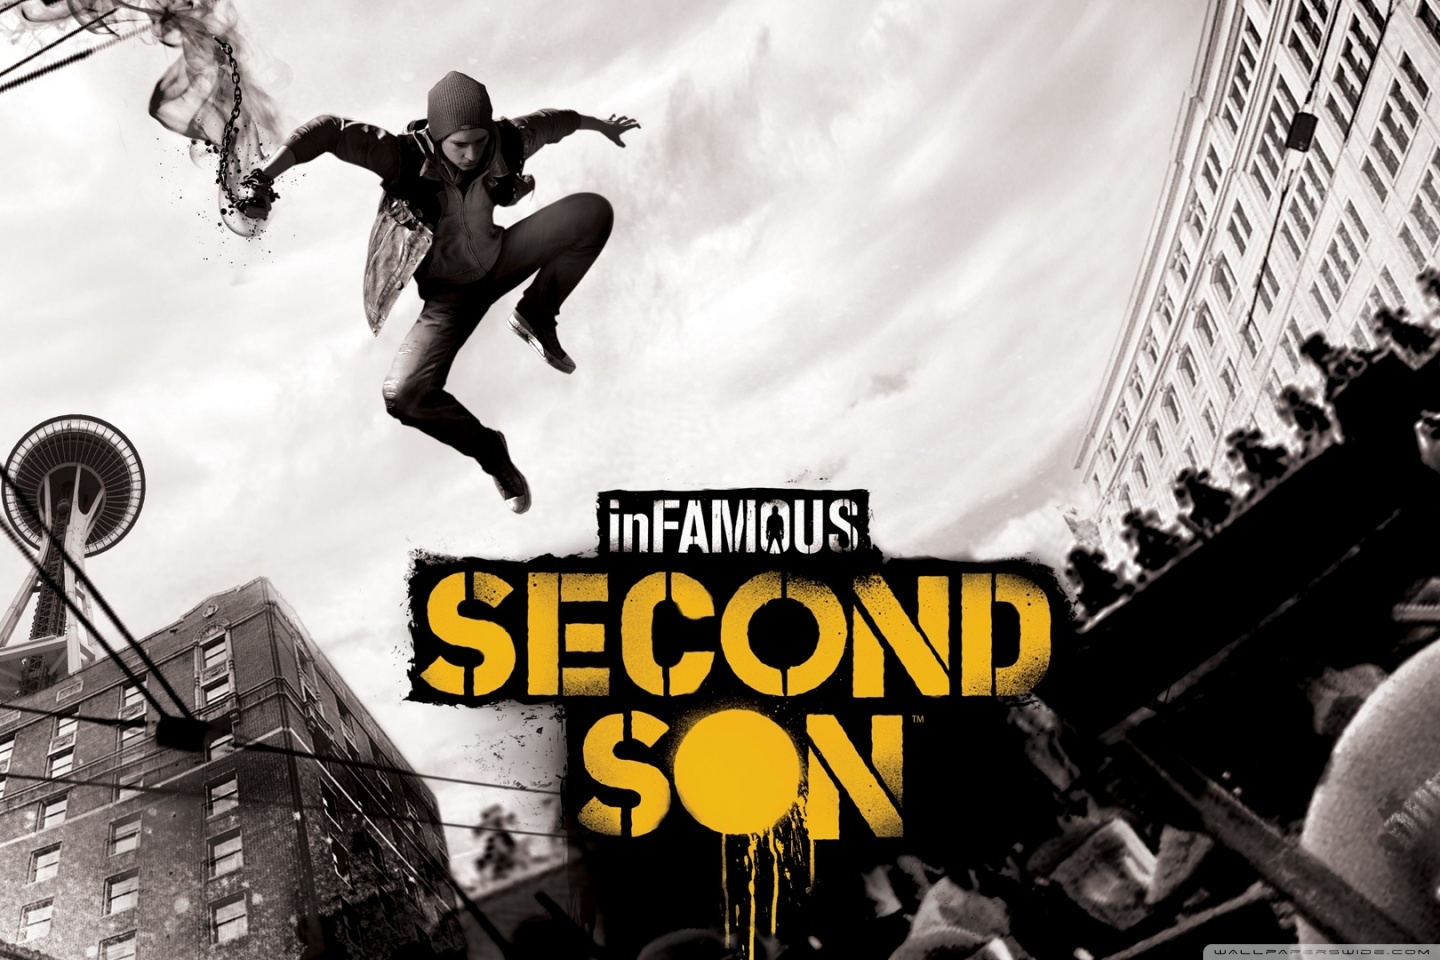 Infamous Second Son